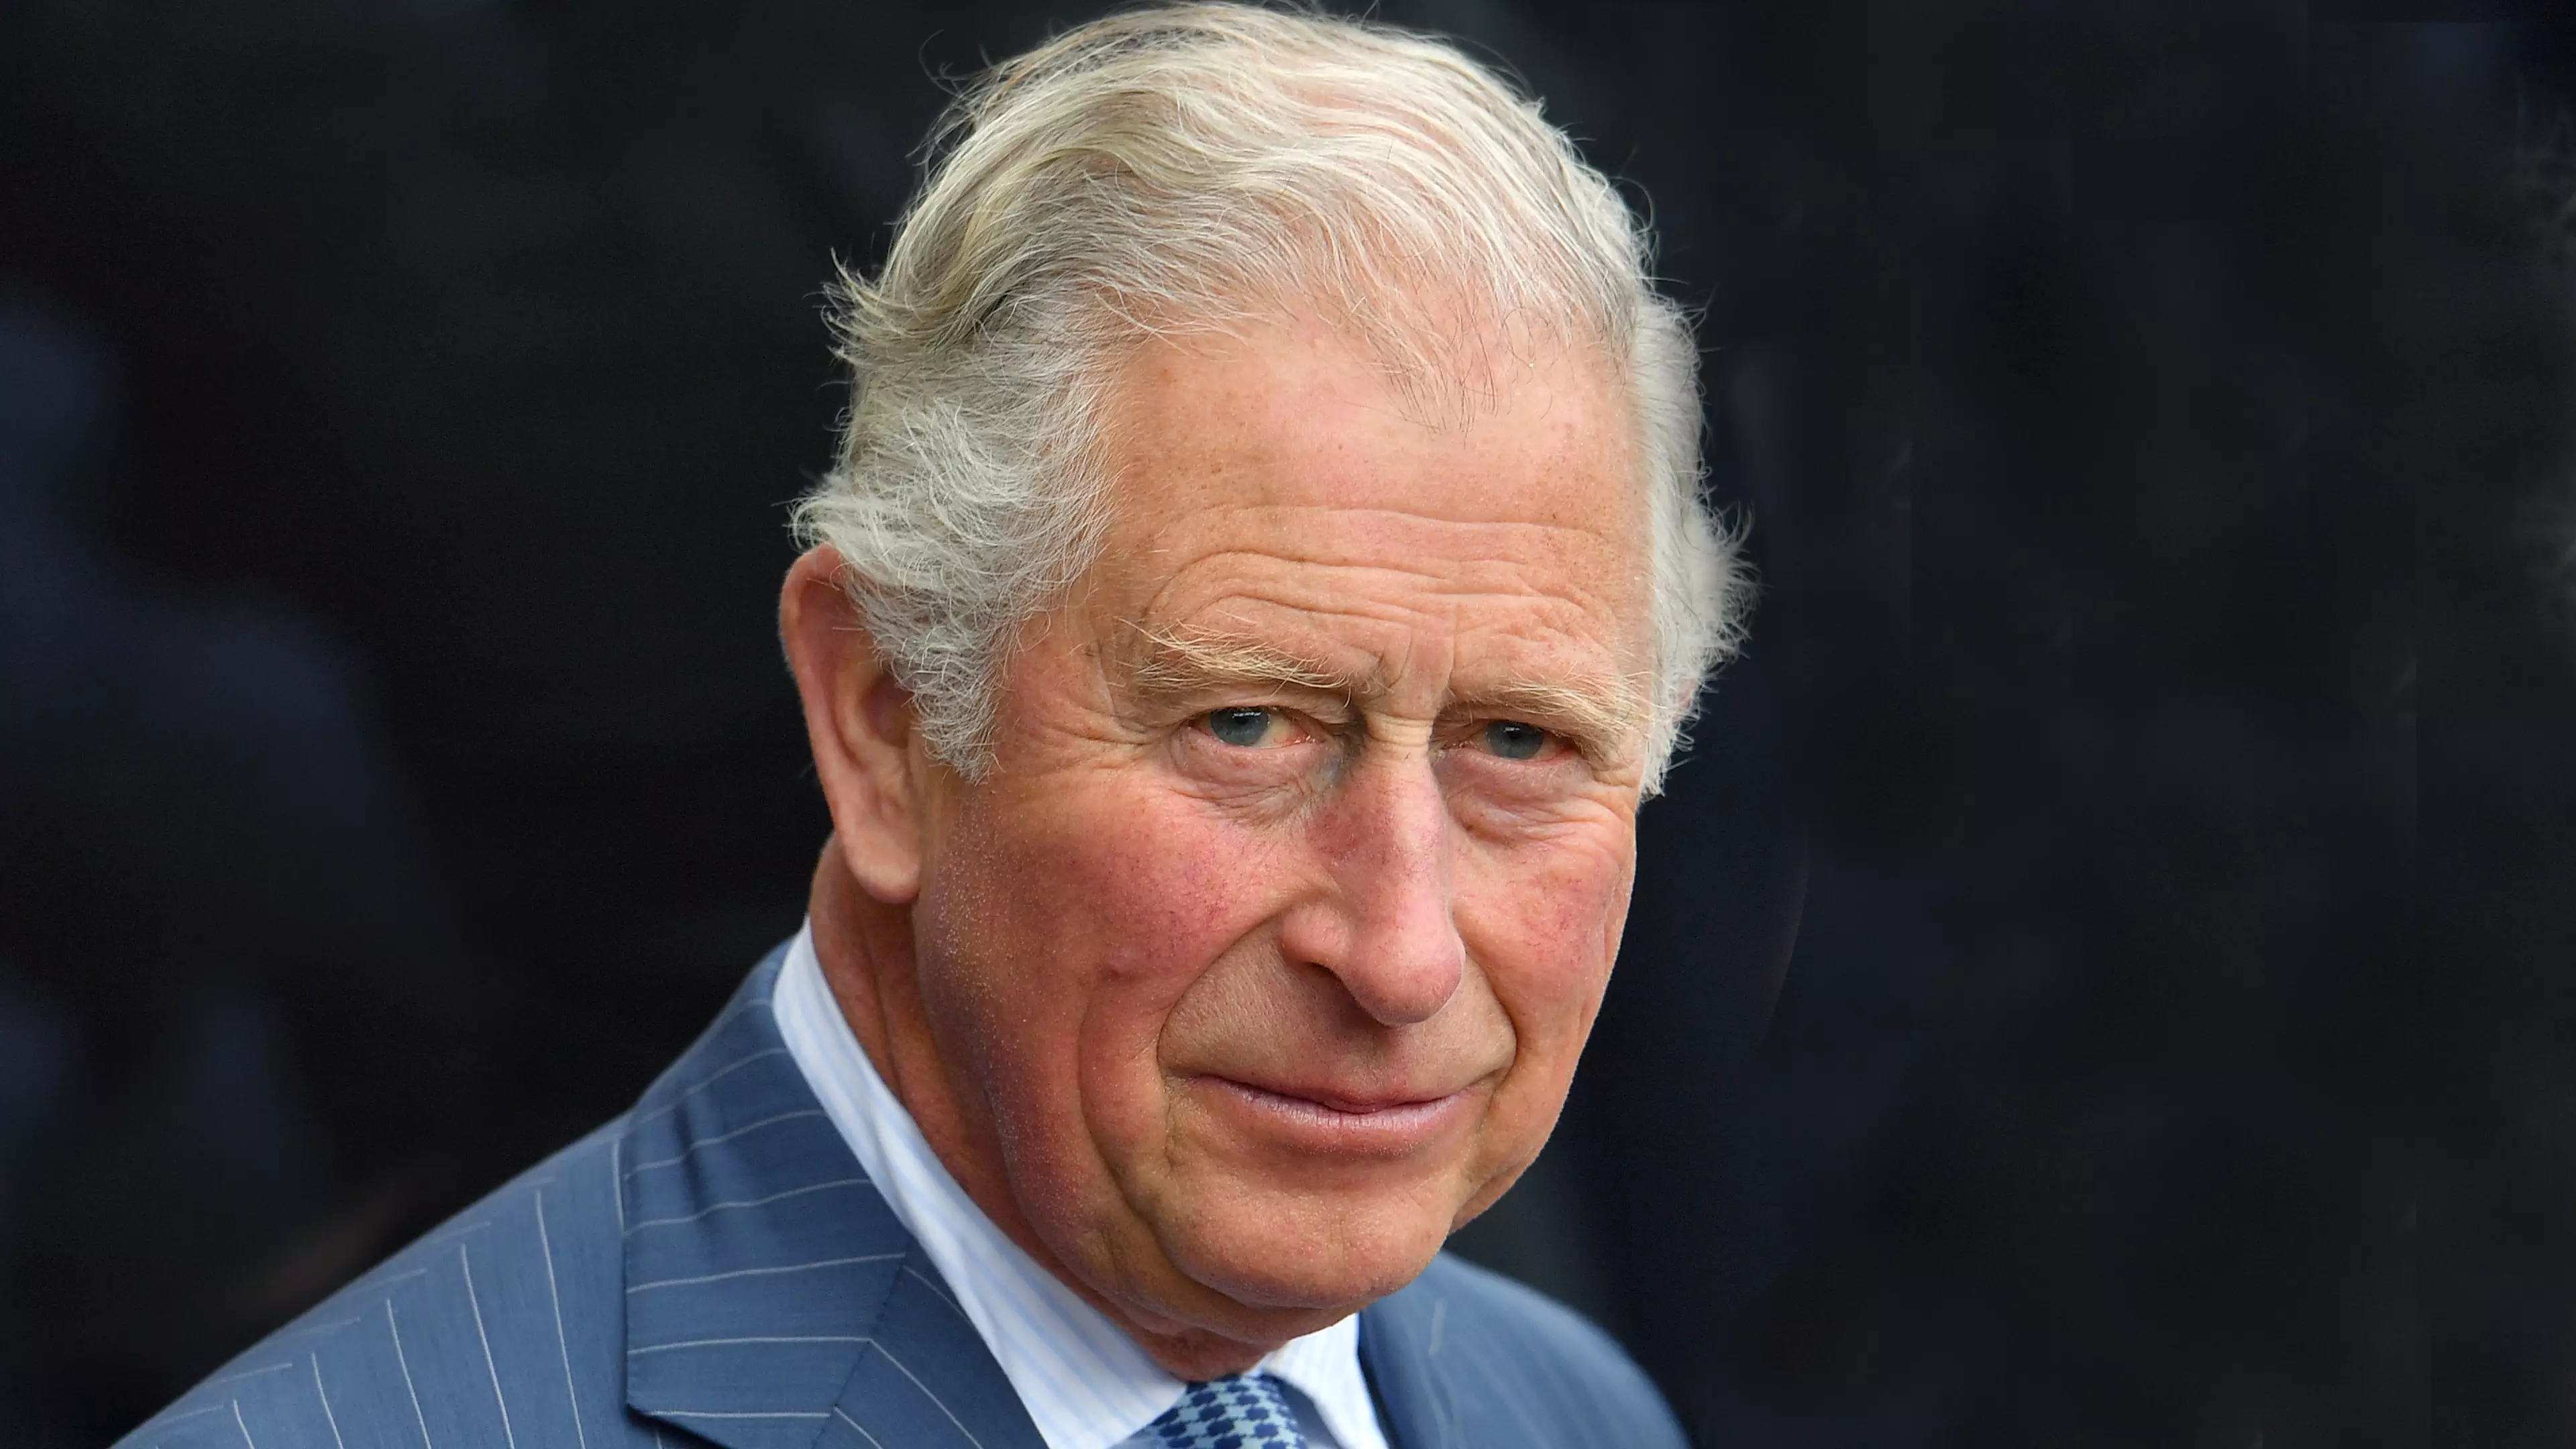 Prince Charles Has Recovered From Coronavirus